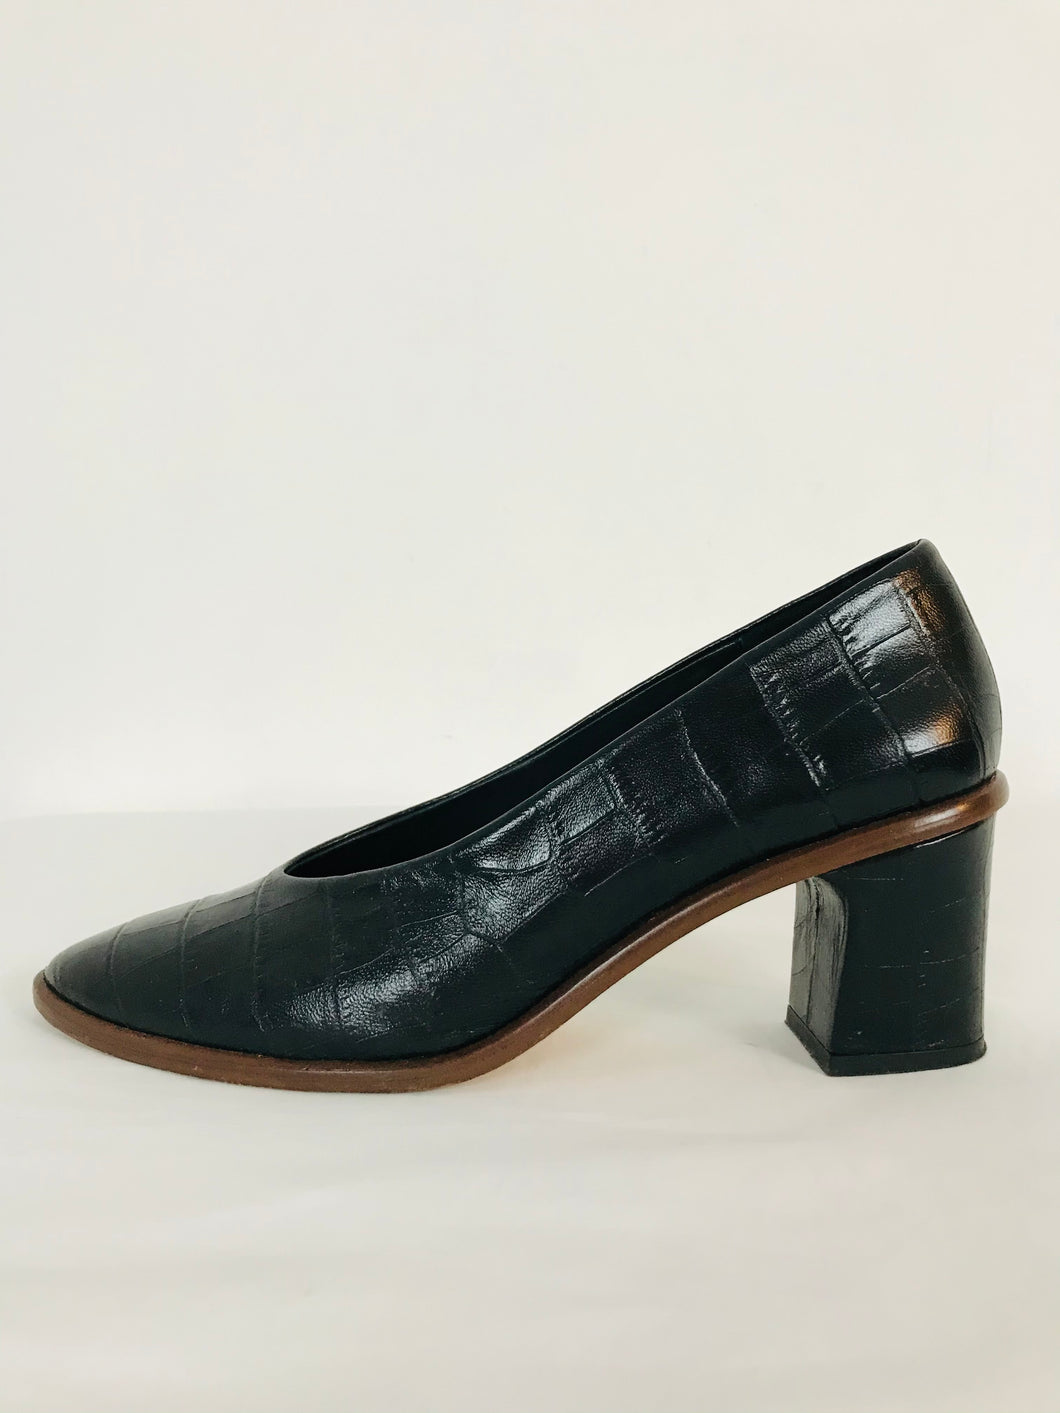 Miista London Women’s Leather Court Heels | UK5 EU38 | Black